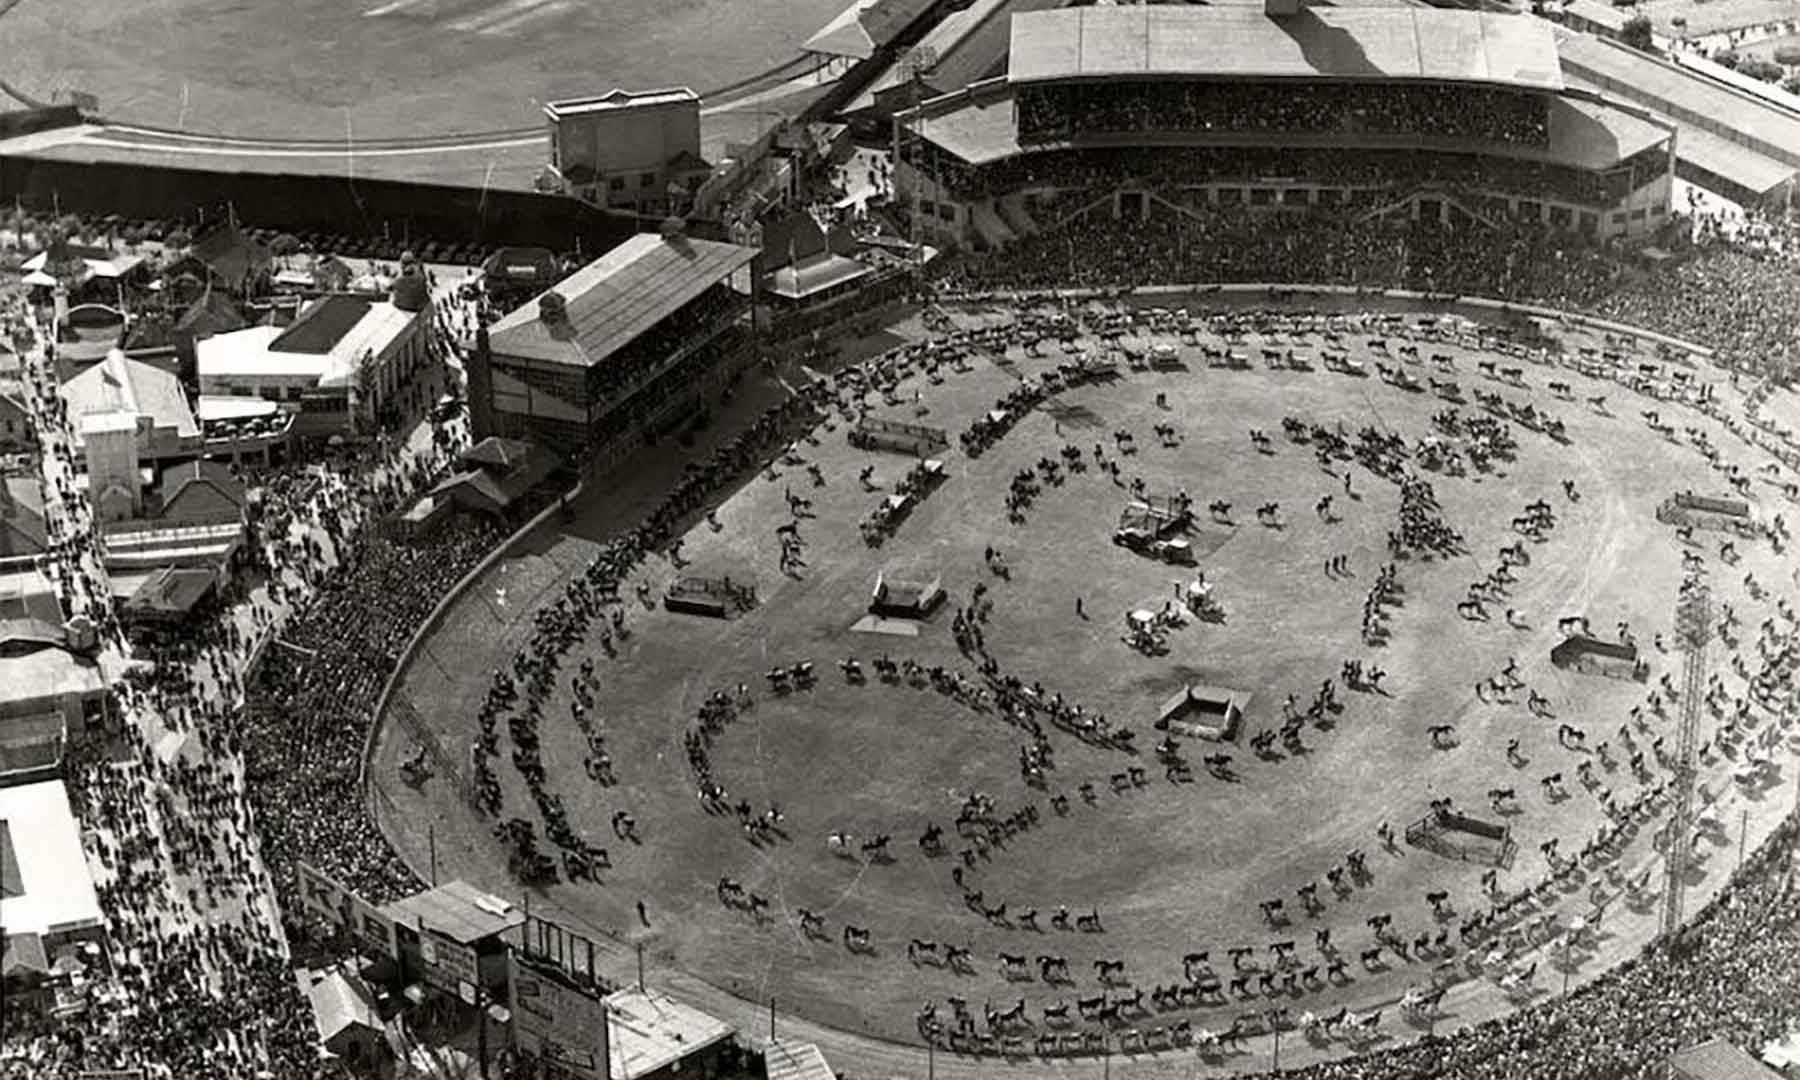 Sydney Showground, Grand Easter Parade, 1936 [RAHS Adastra Collection]